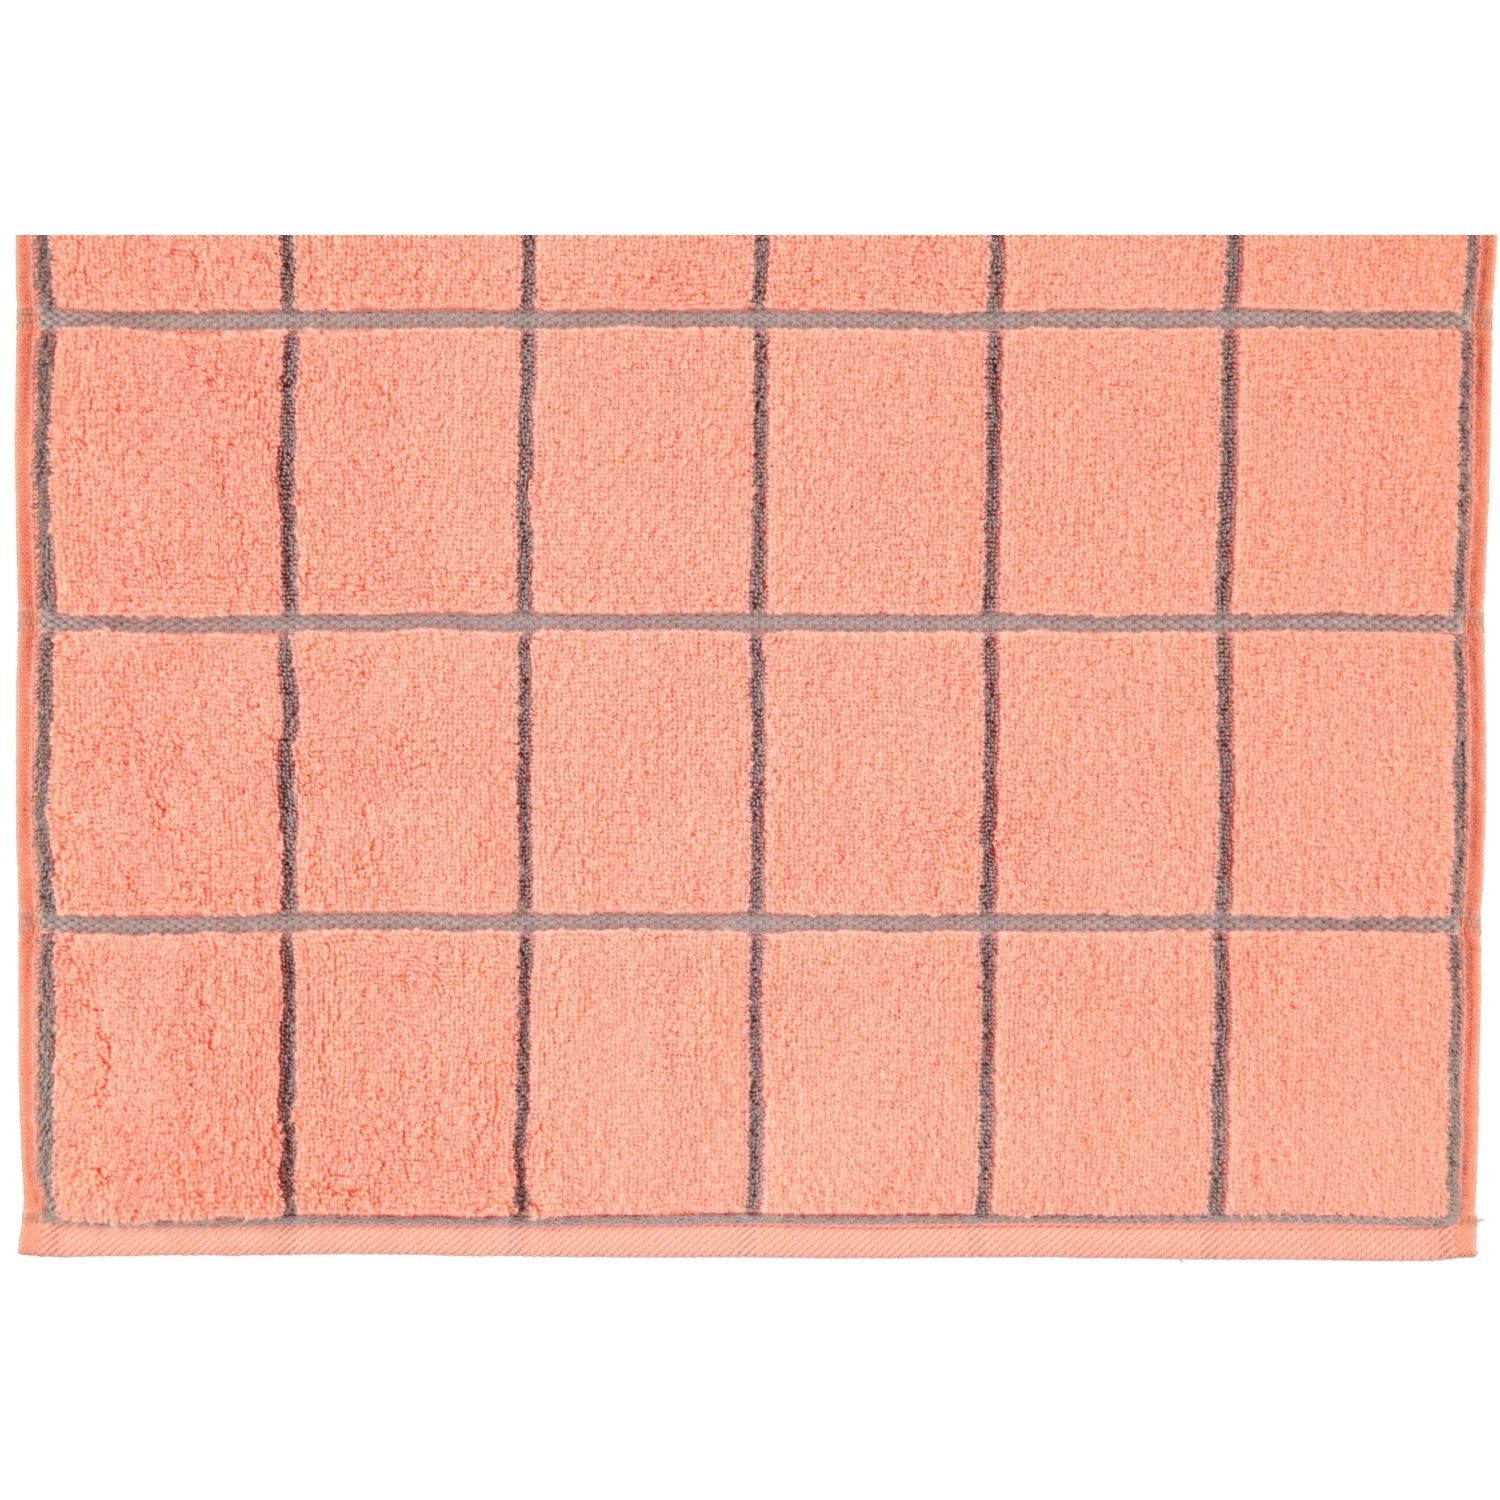 ROSS Handtücher Überkaro 9032, 100% Baumwolle peach pink